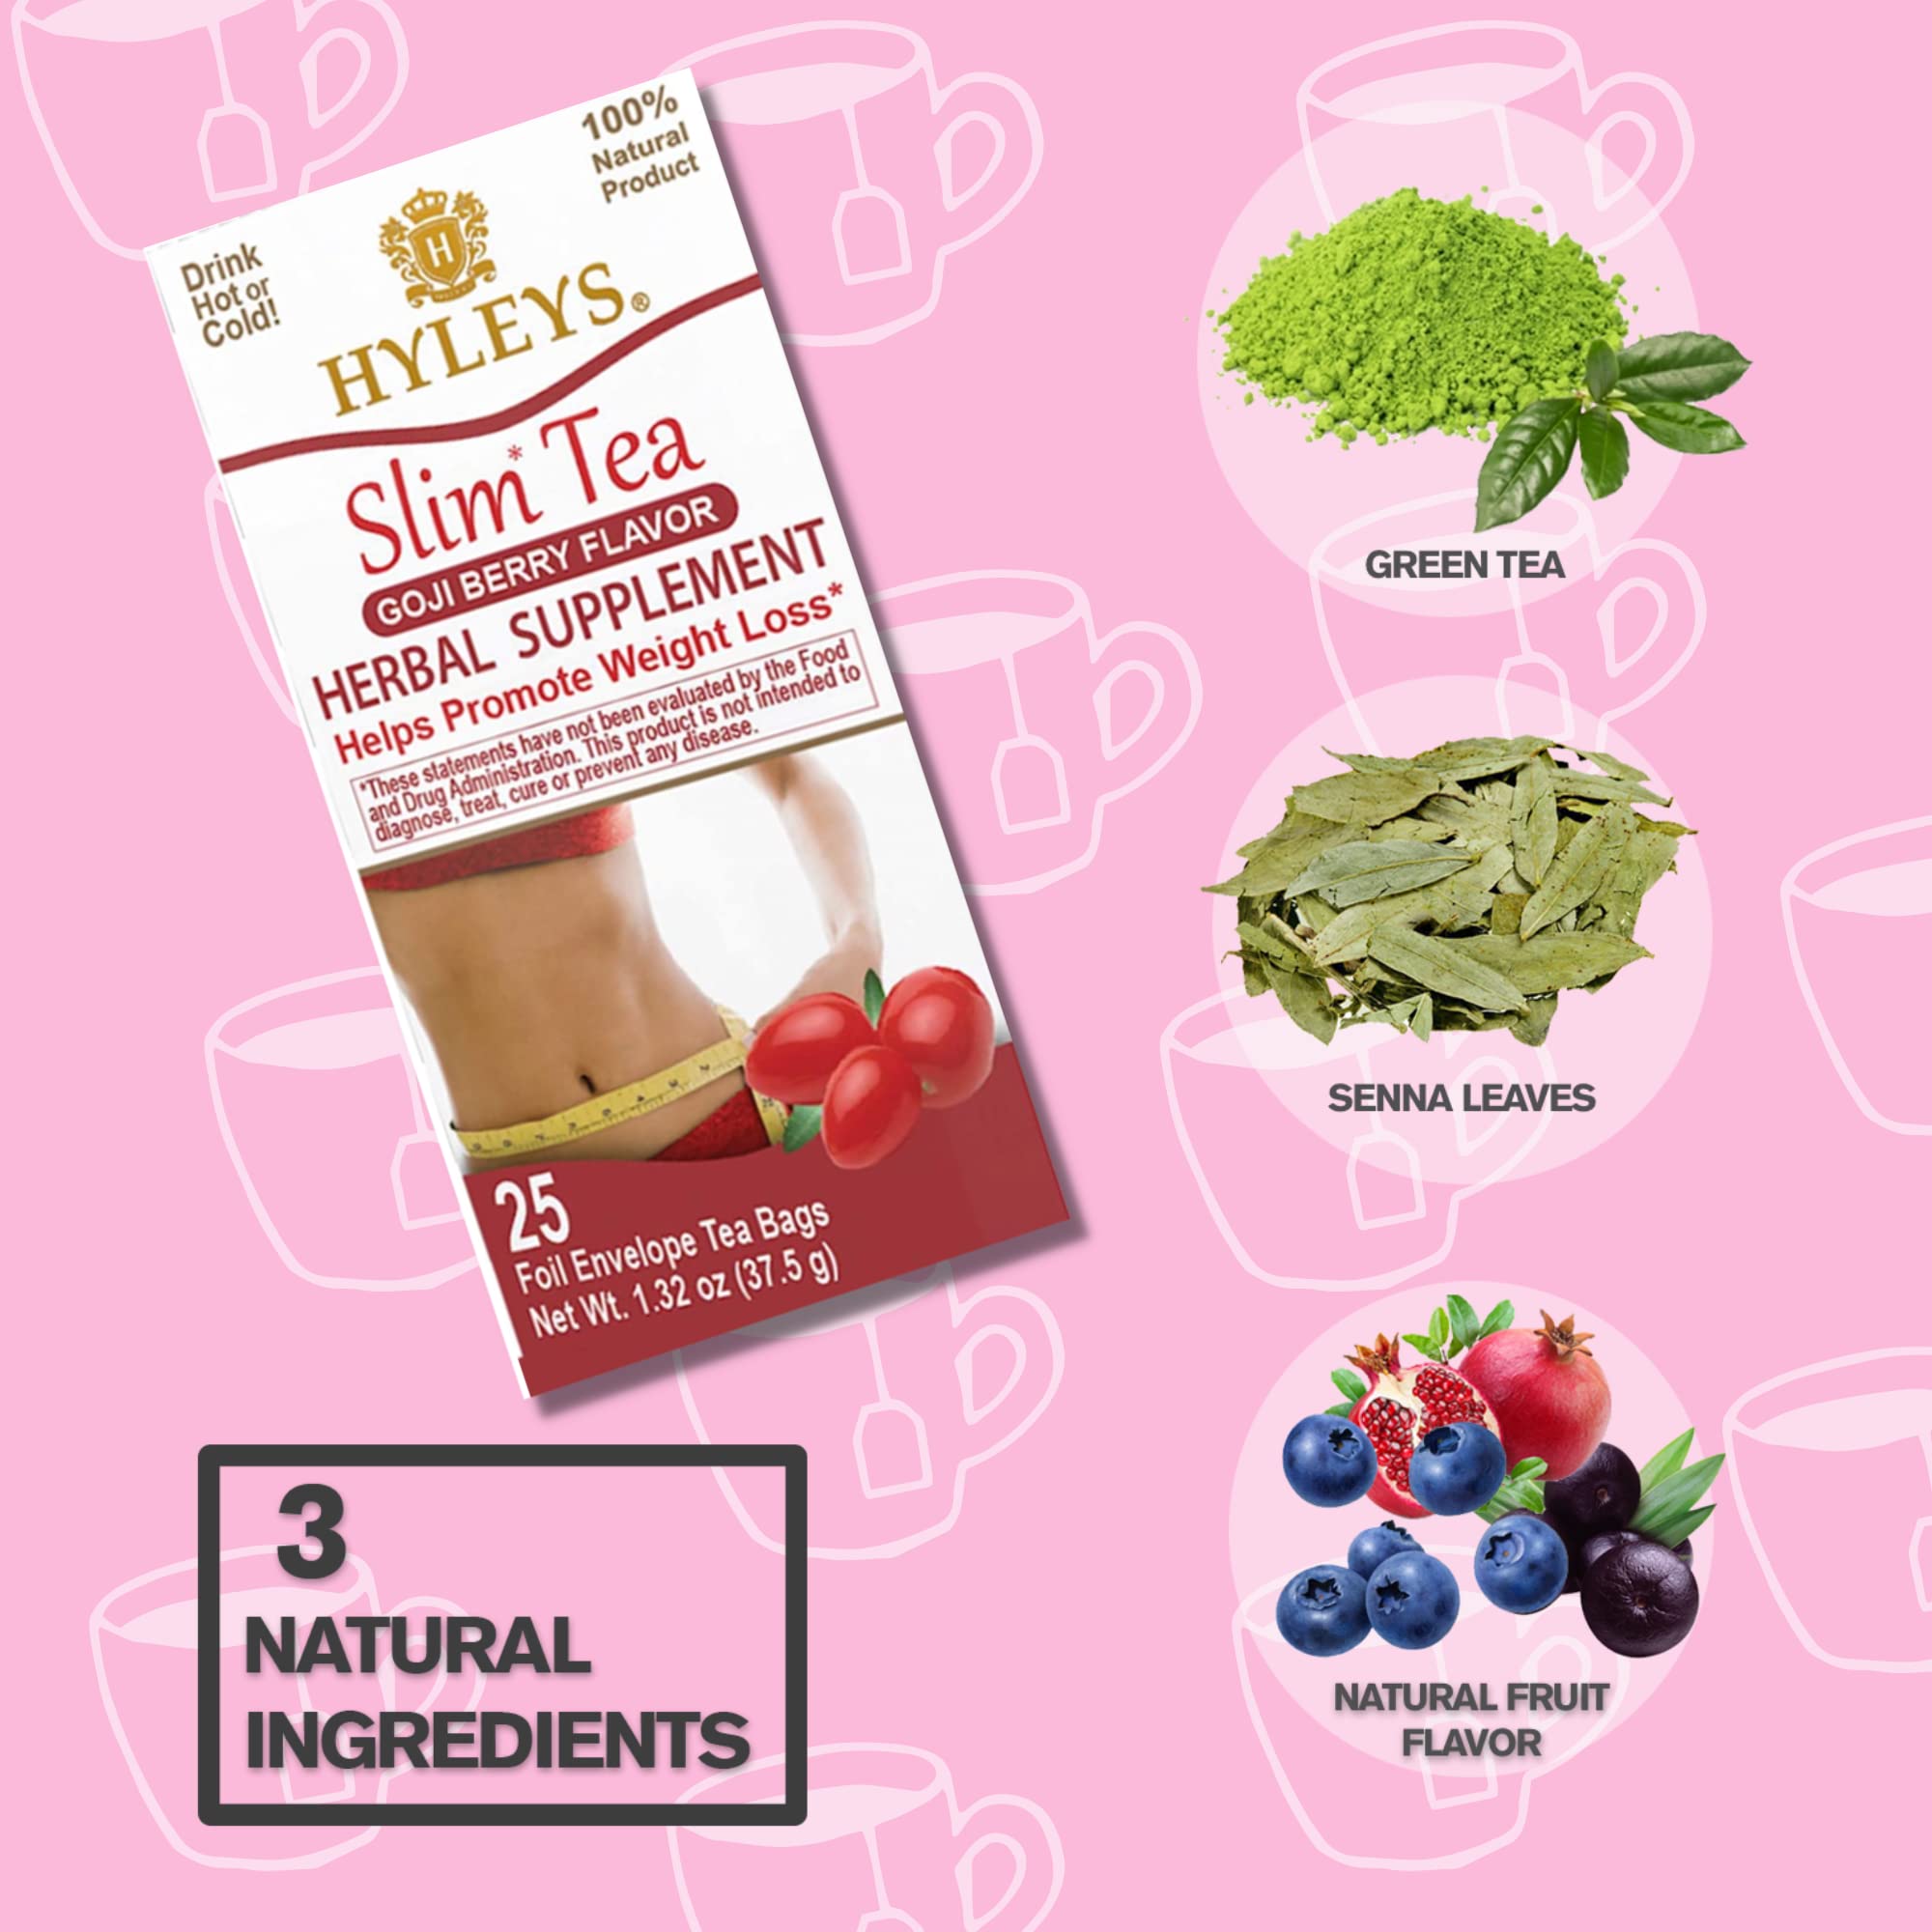 HYLEYS TEA Hyleys Slim Tea Goji Berry Flavor - Weight Loss Herbal Supplement Cleanse And Detox - 25 Tea Bags (1 Pack)